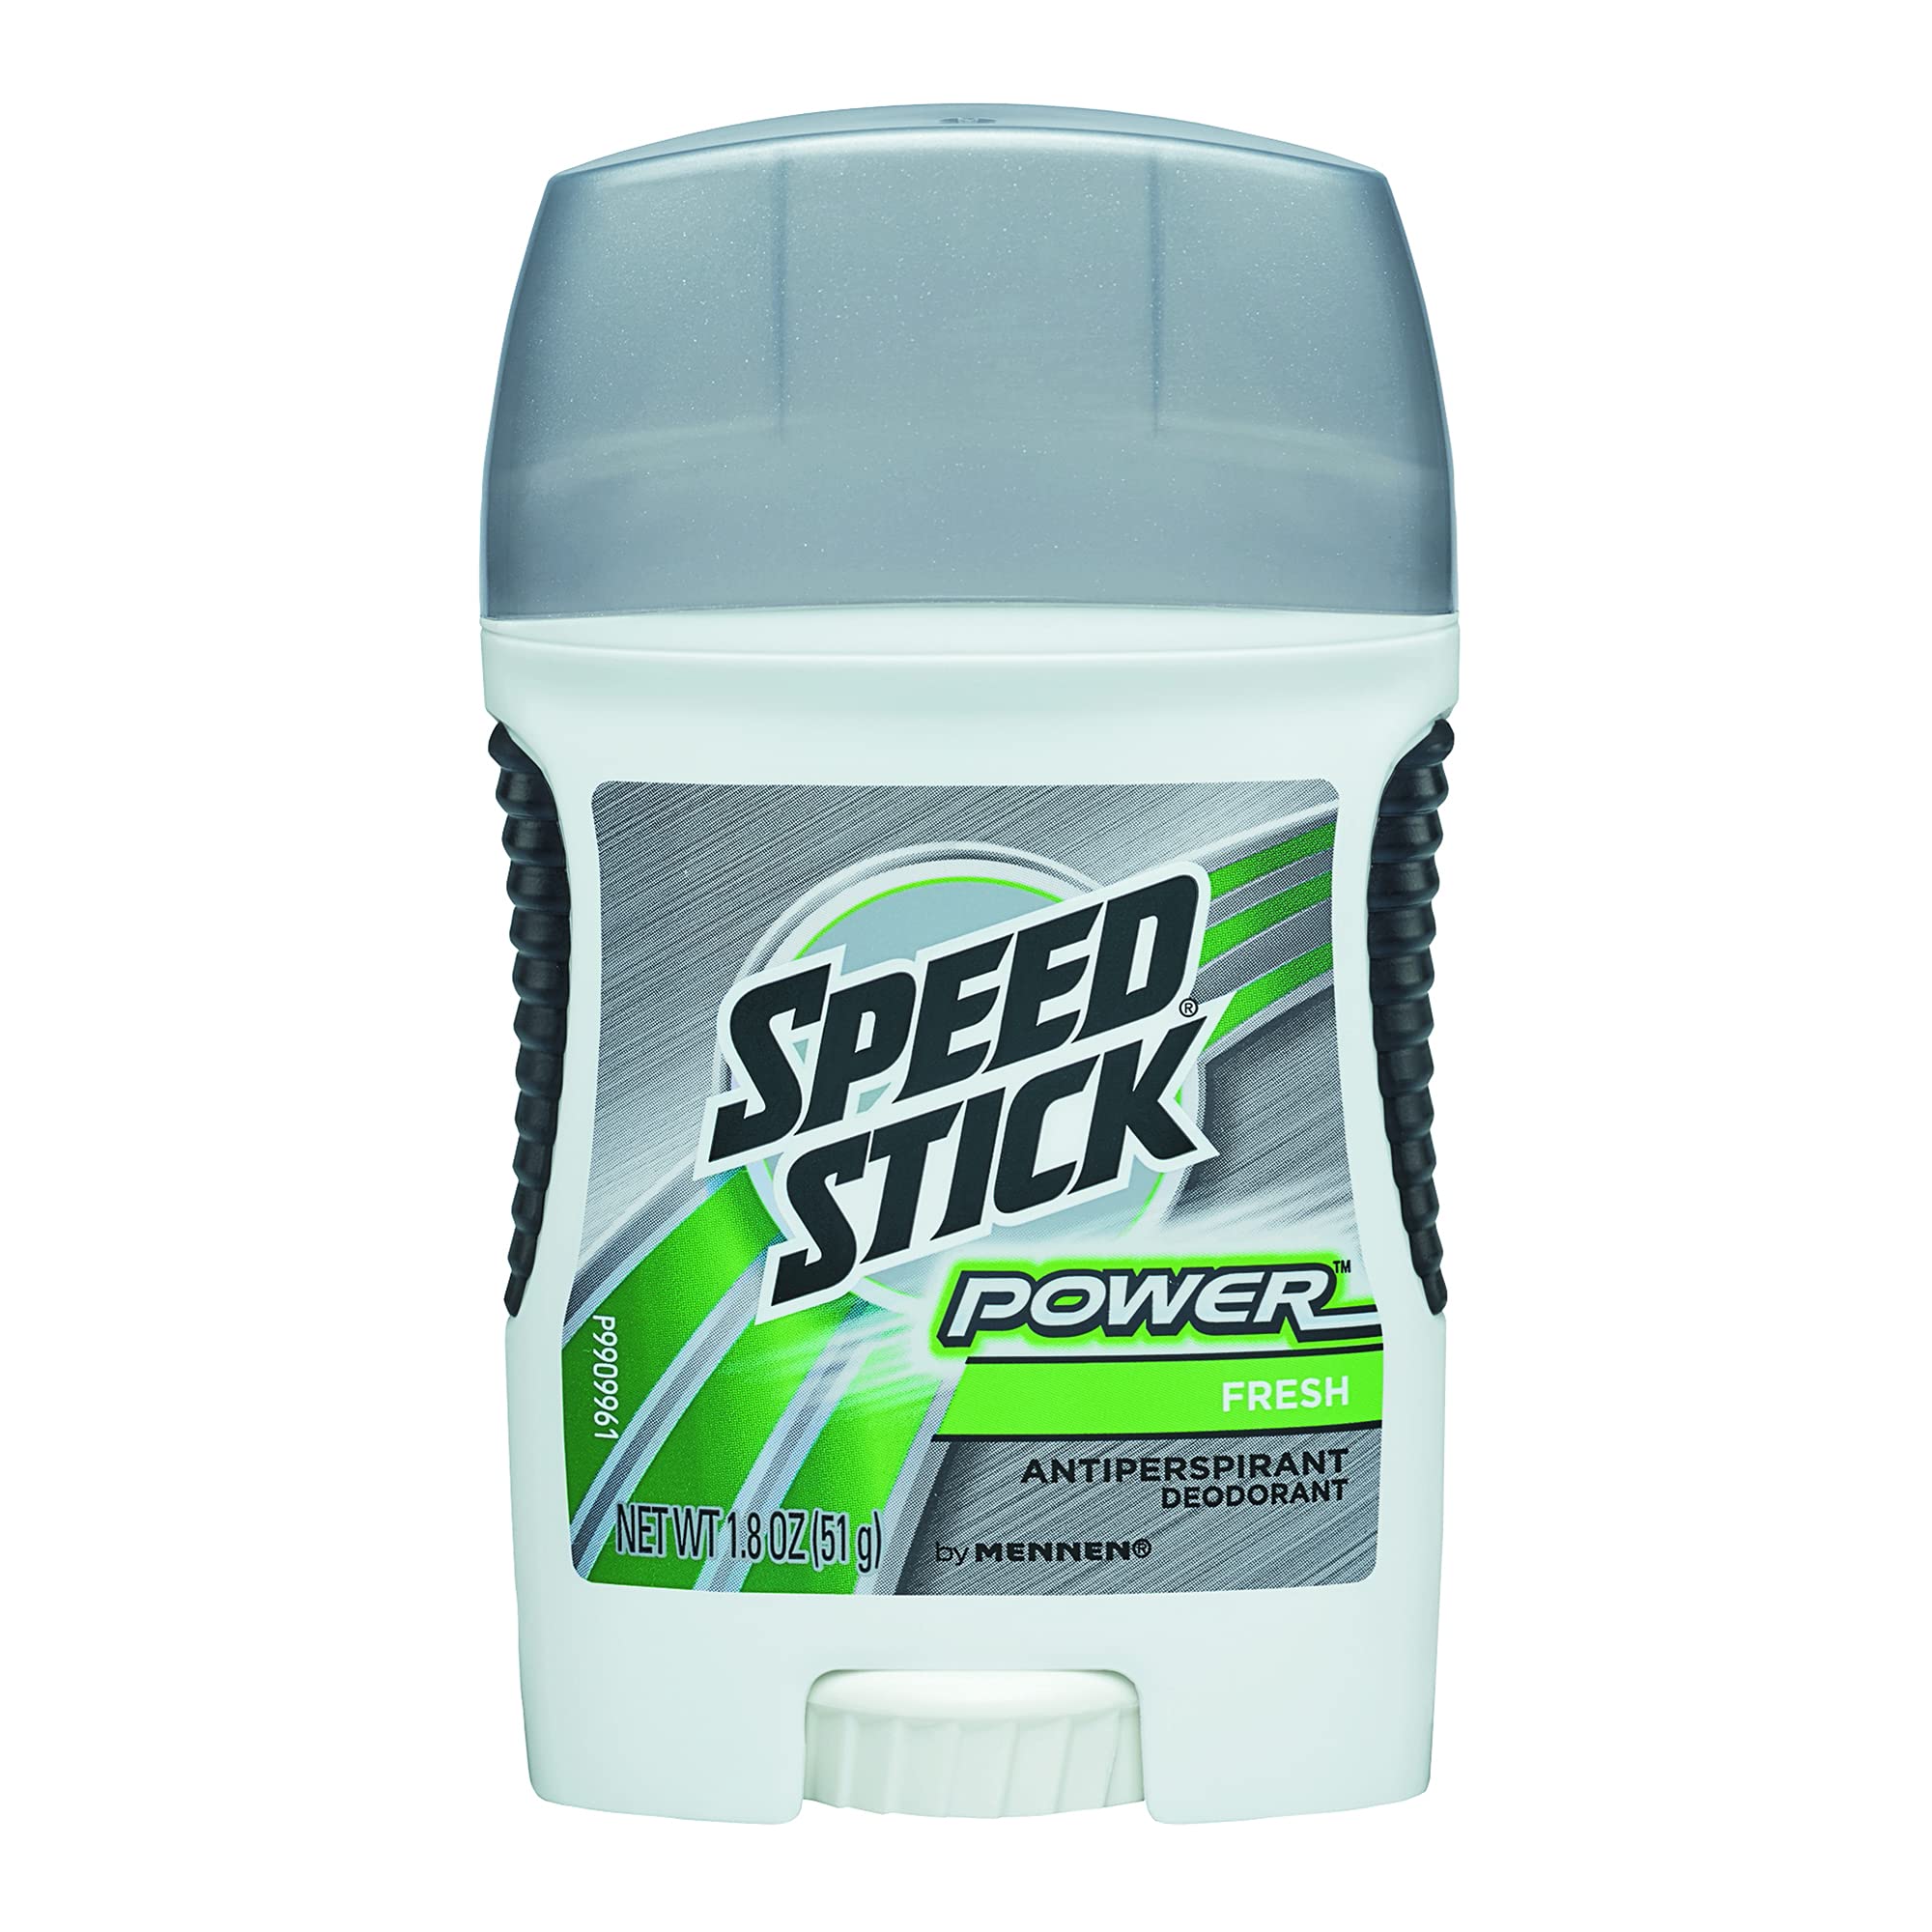 Speed Stick Power Fresh Antiperspirant Deodorant, 1.8 Ounce - 12 per case.